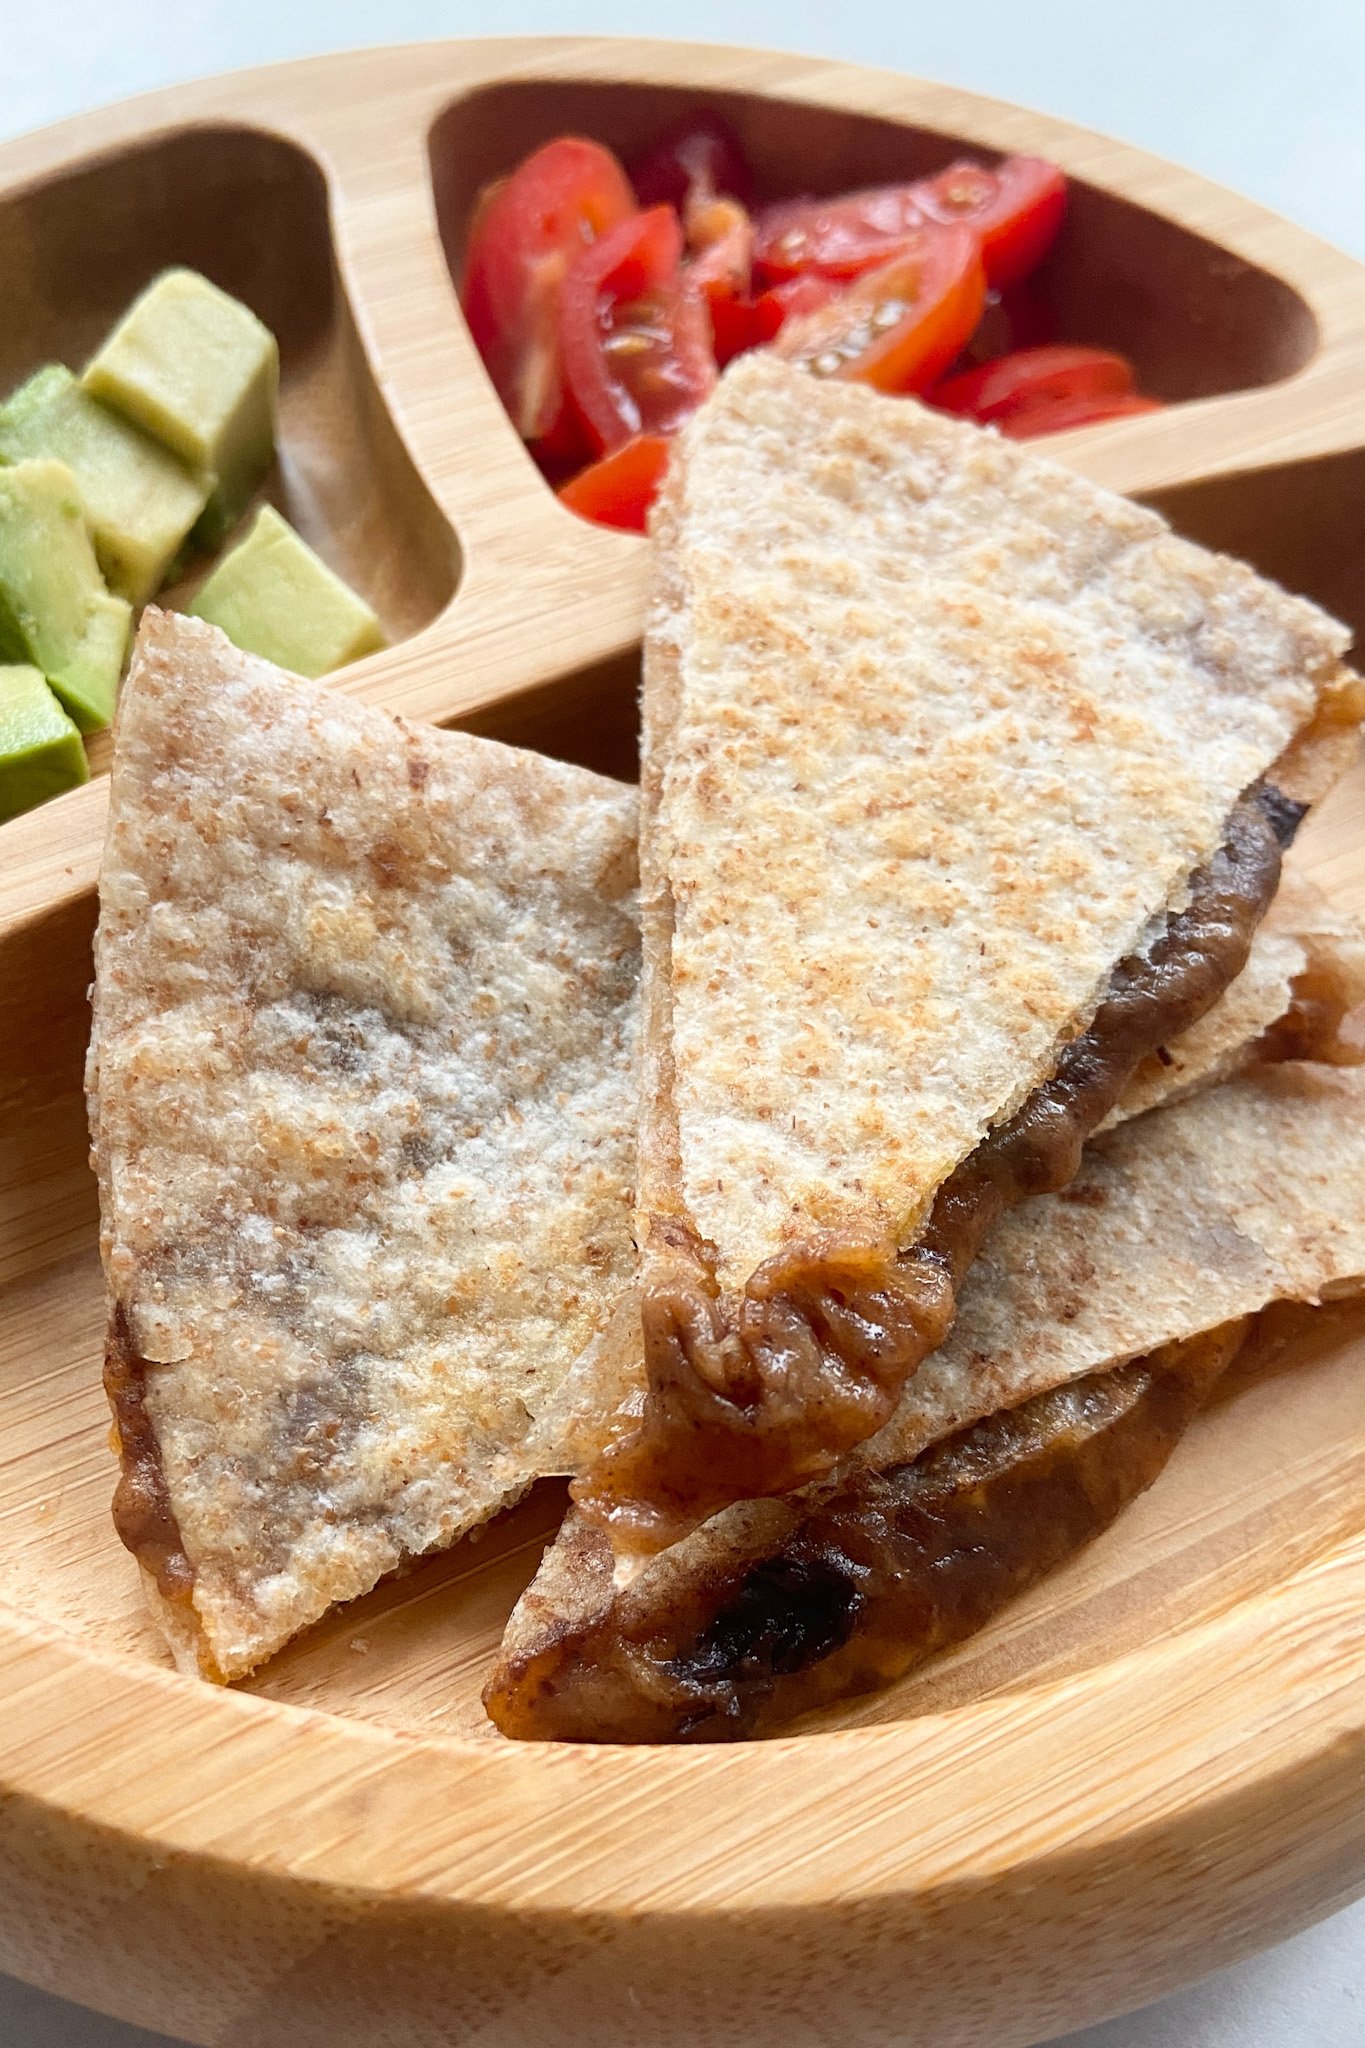 https://feedingtinybellies.com/wp-content/uploads/2022/01/Black-bean-and-cheese-quesadillas.jpg